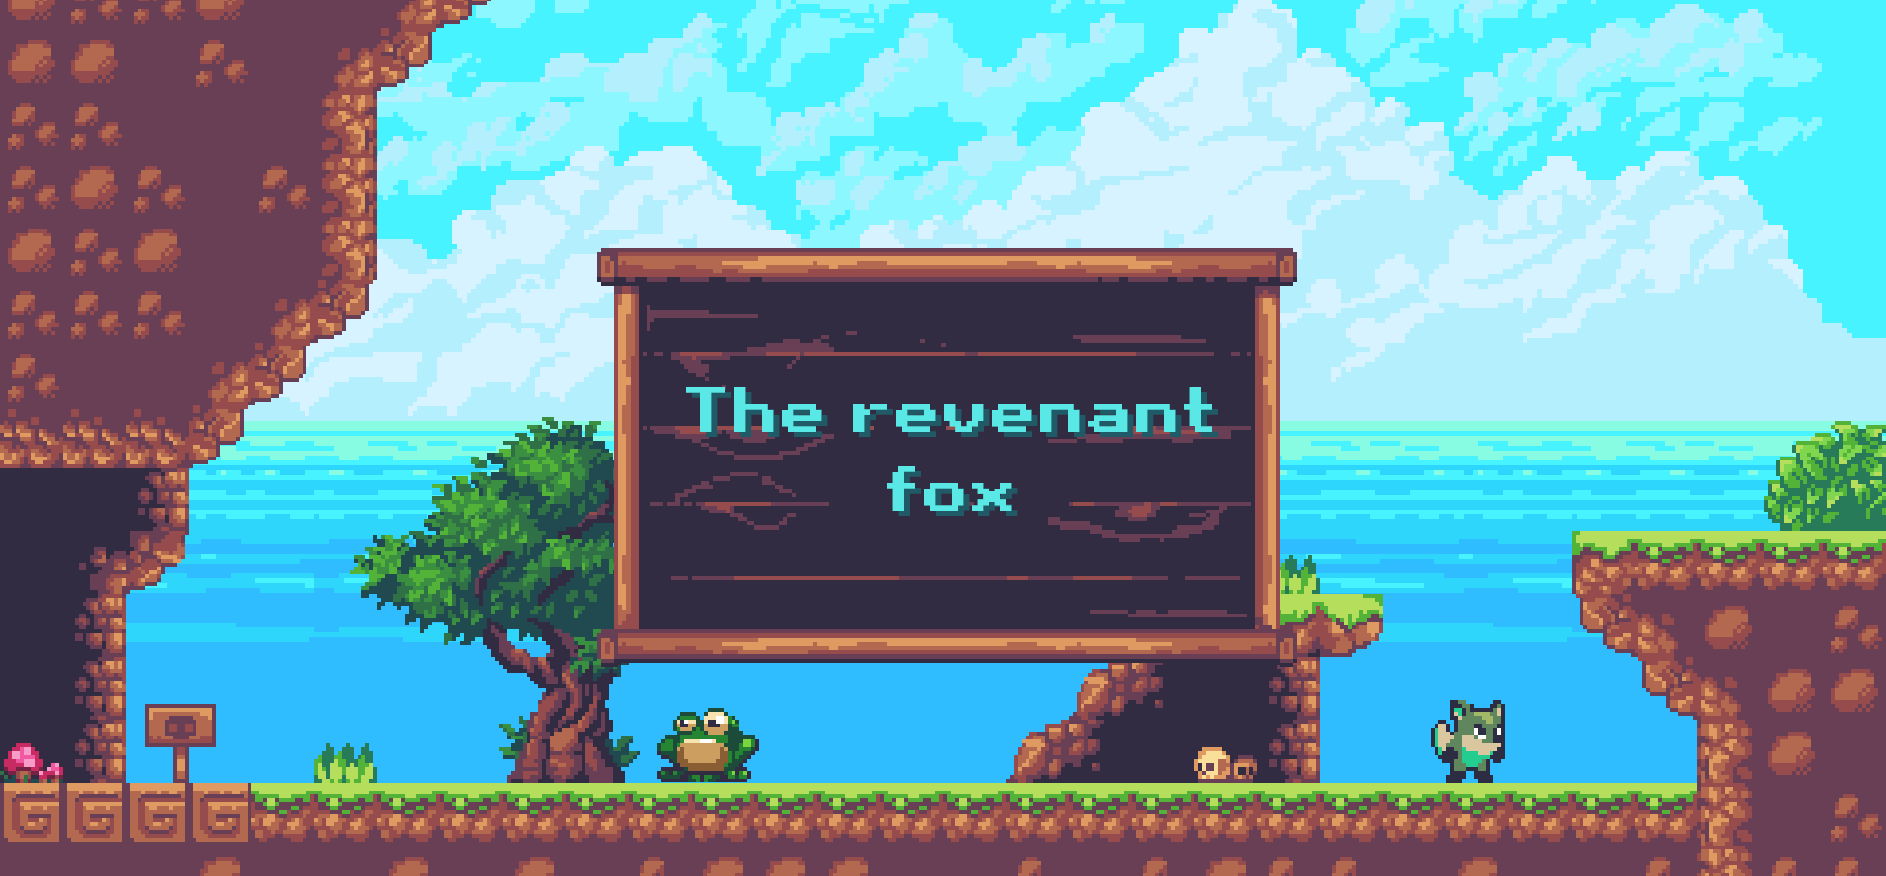 The revenant fox